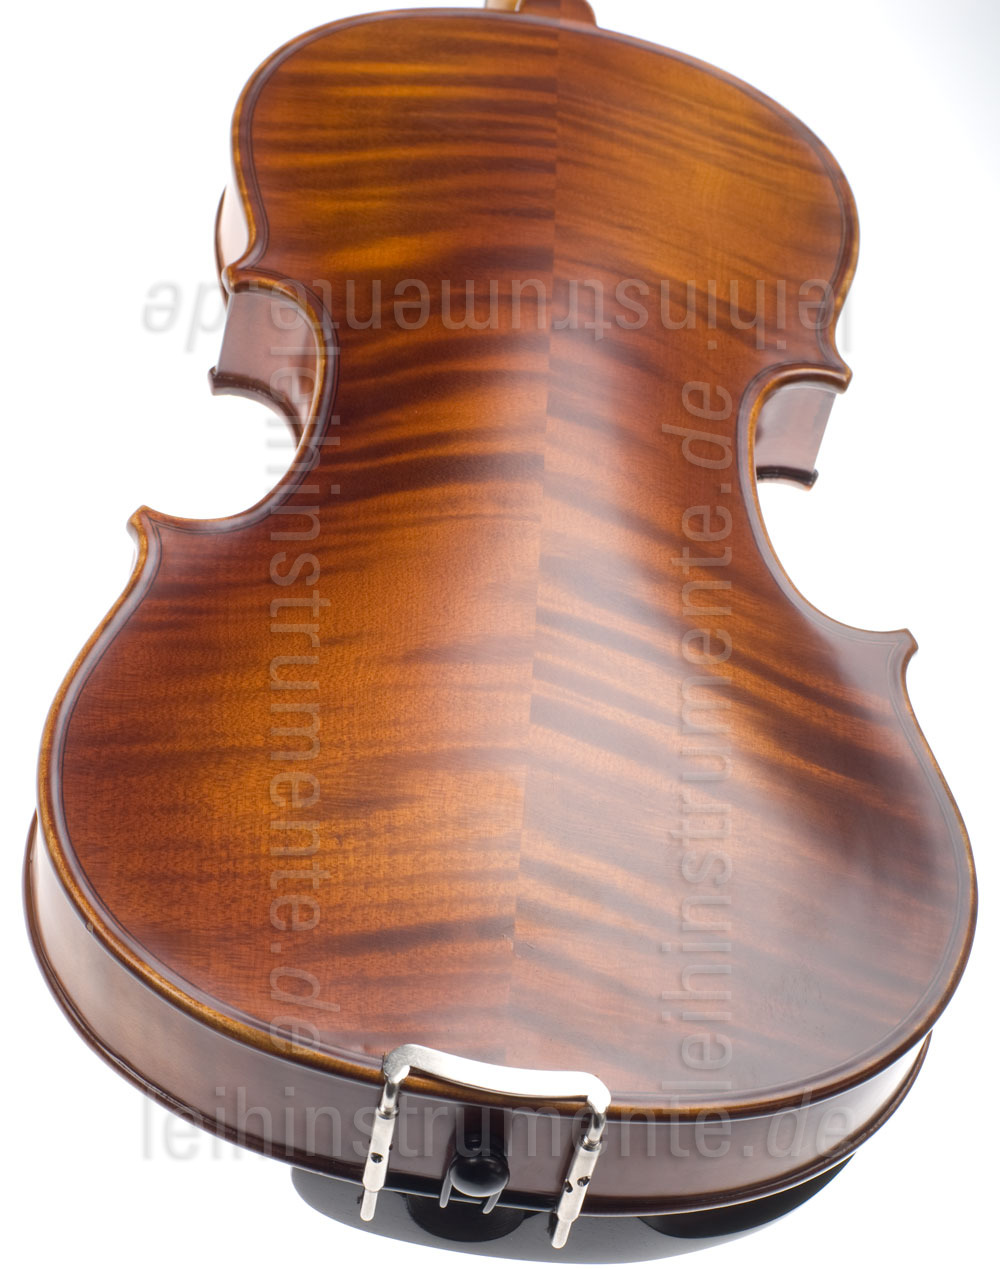 to article description / price 4/4 Violinset GASPARINI MODEL ADVANCED - all solid - shoulder rest